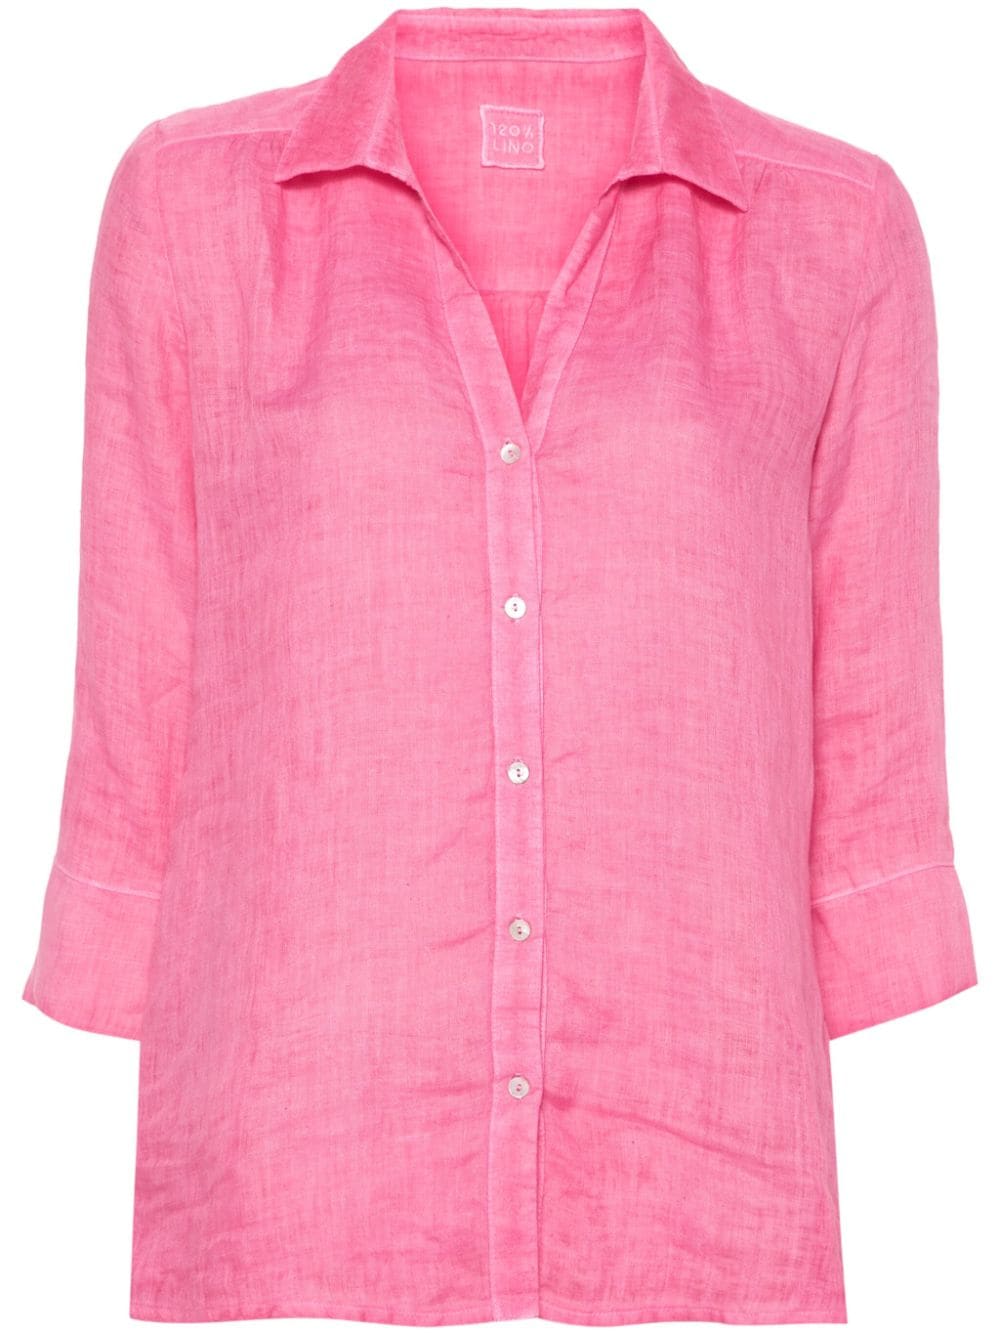 120% Lino poplin linen shirt - Pink von 120% Lino